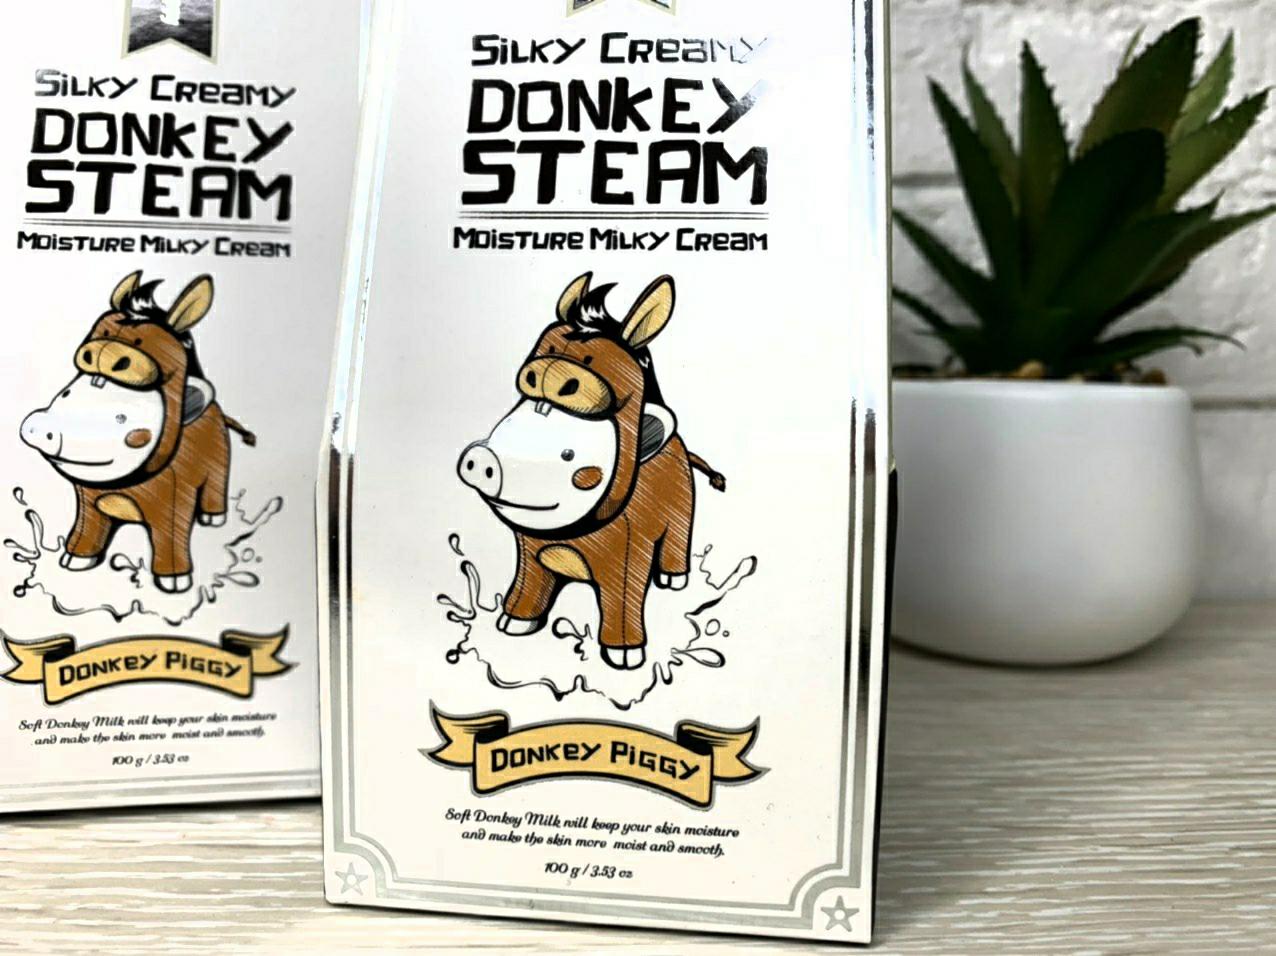 Silky creamy donkey steam moisture milky cream крем фото 111